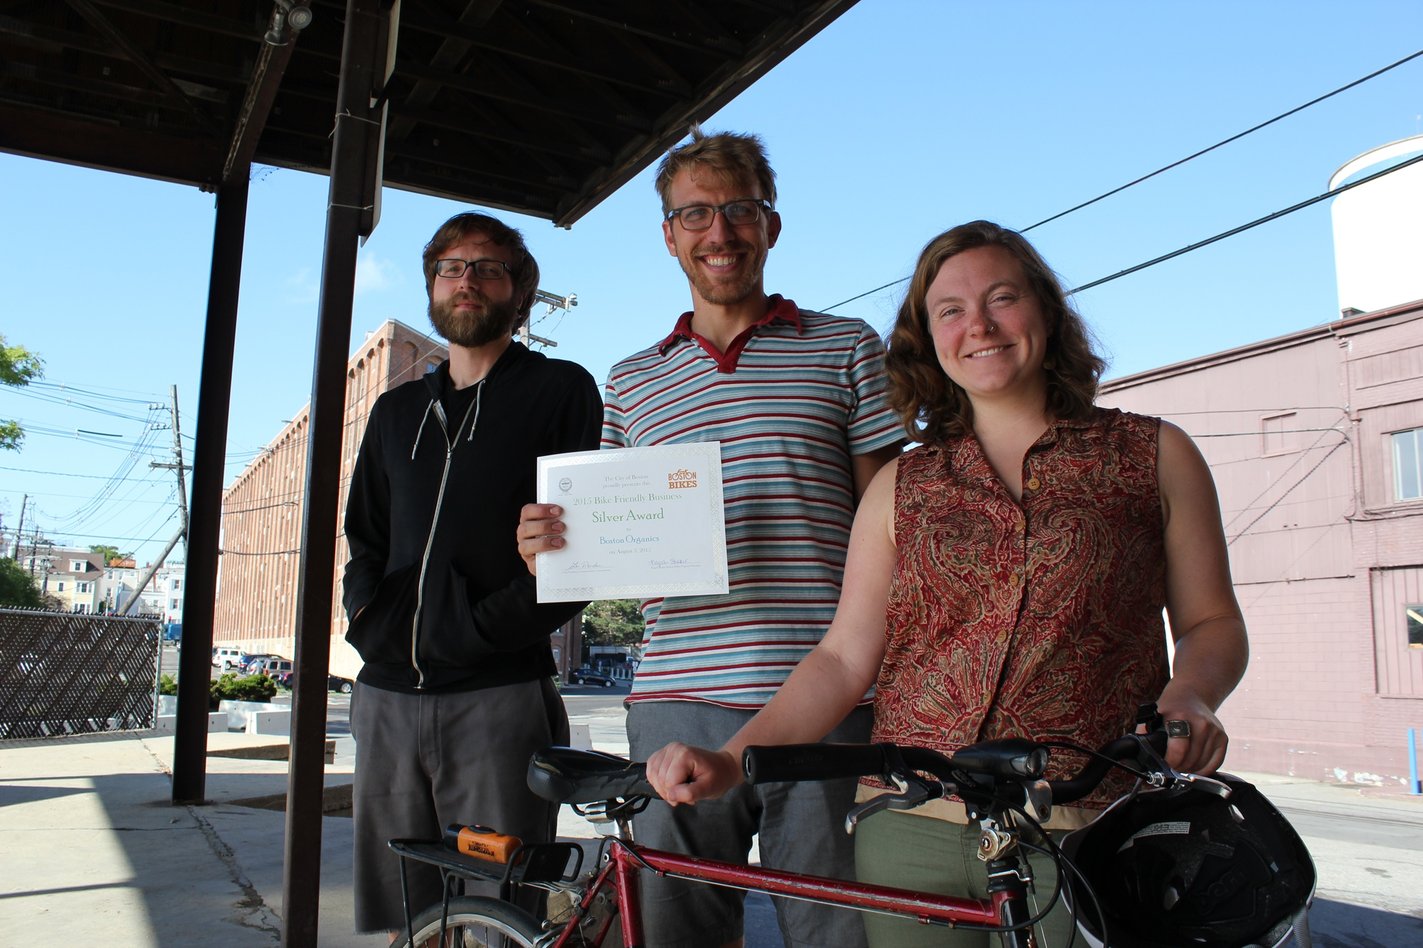 Boston Organics - Bike Friendly Business Award recipient